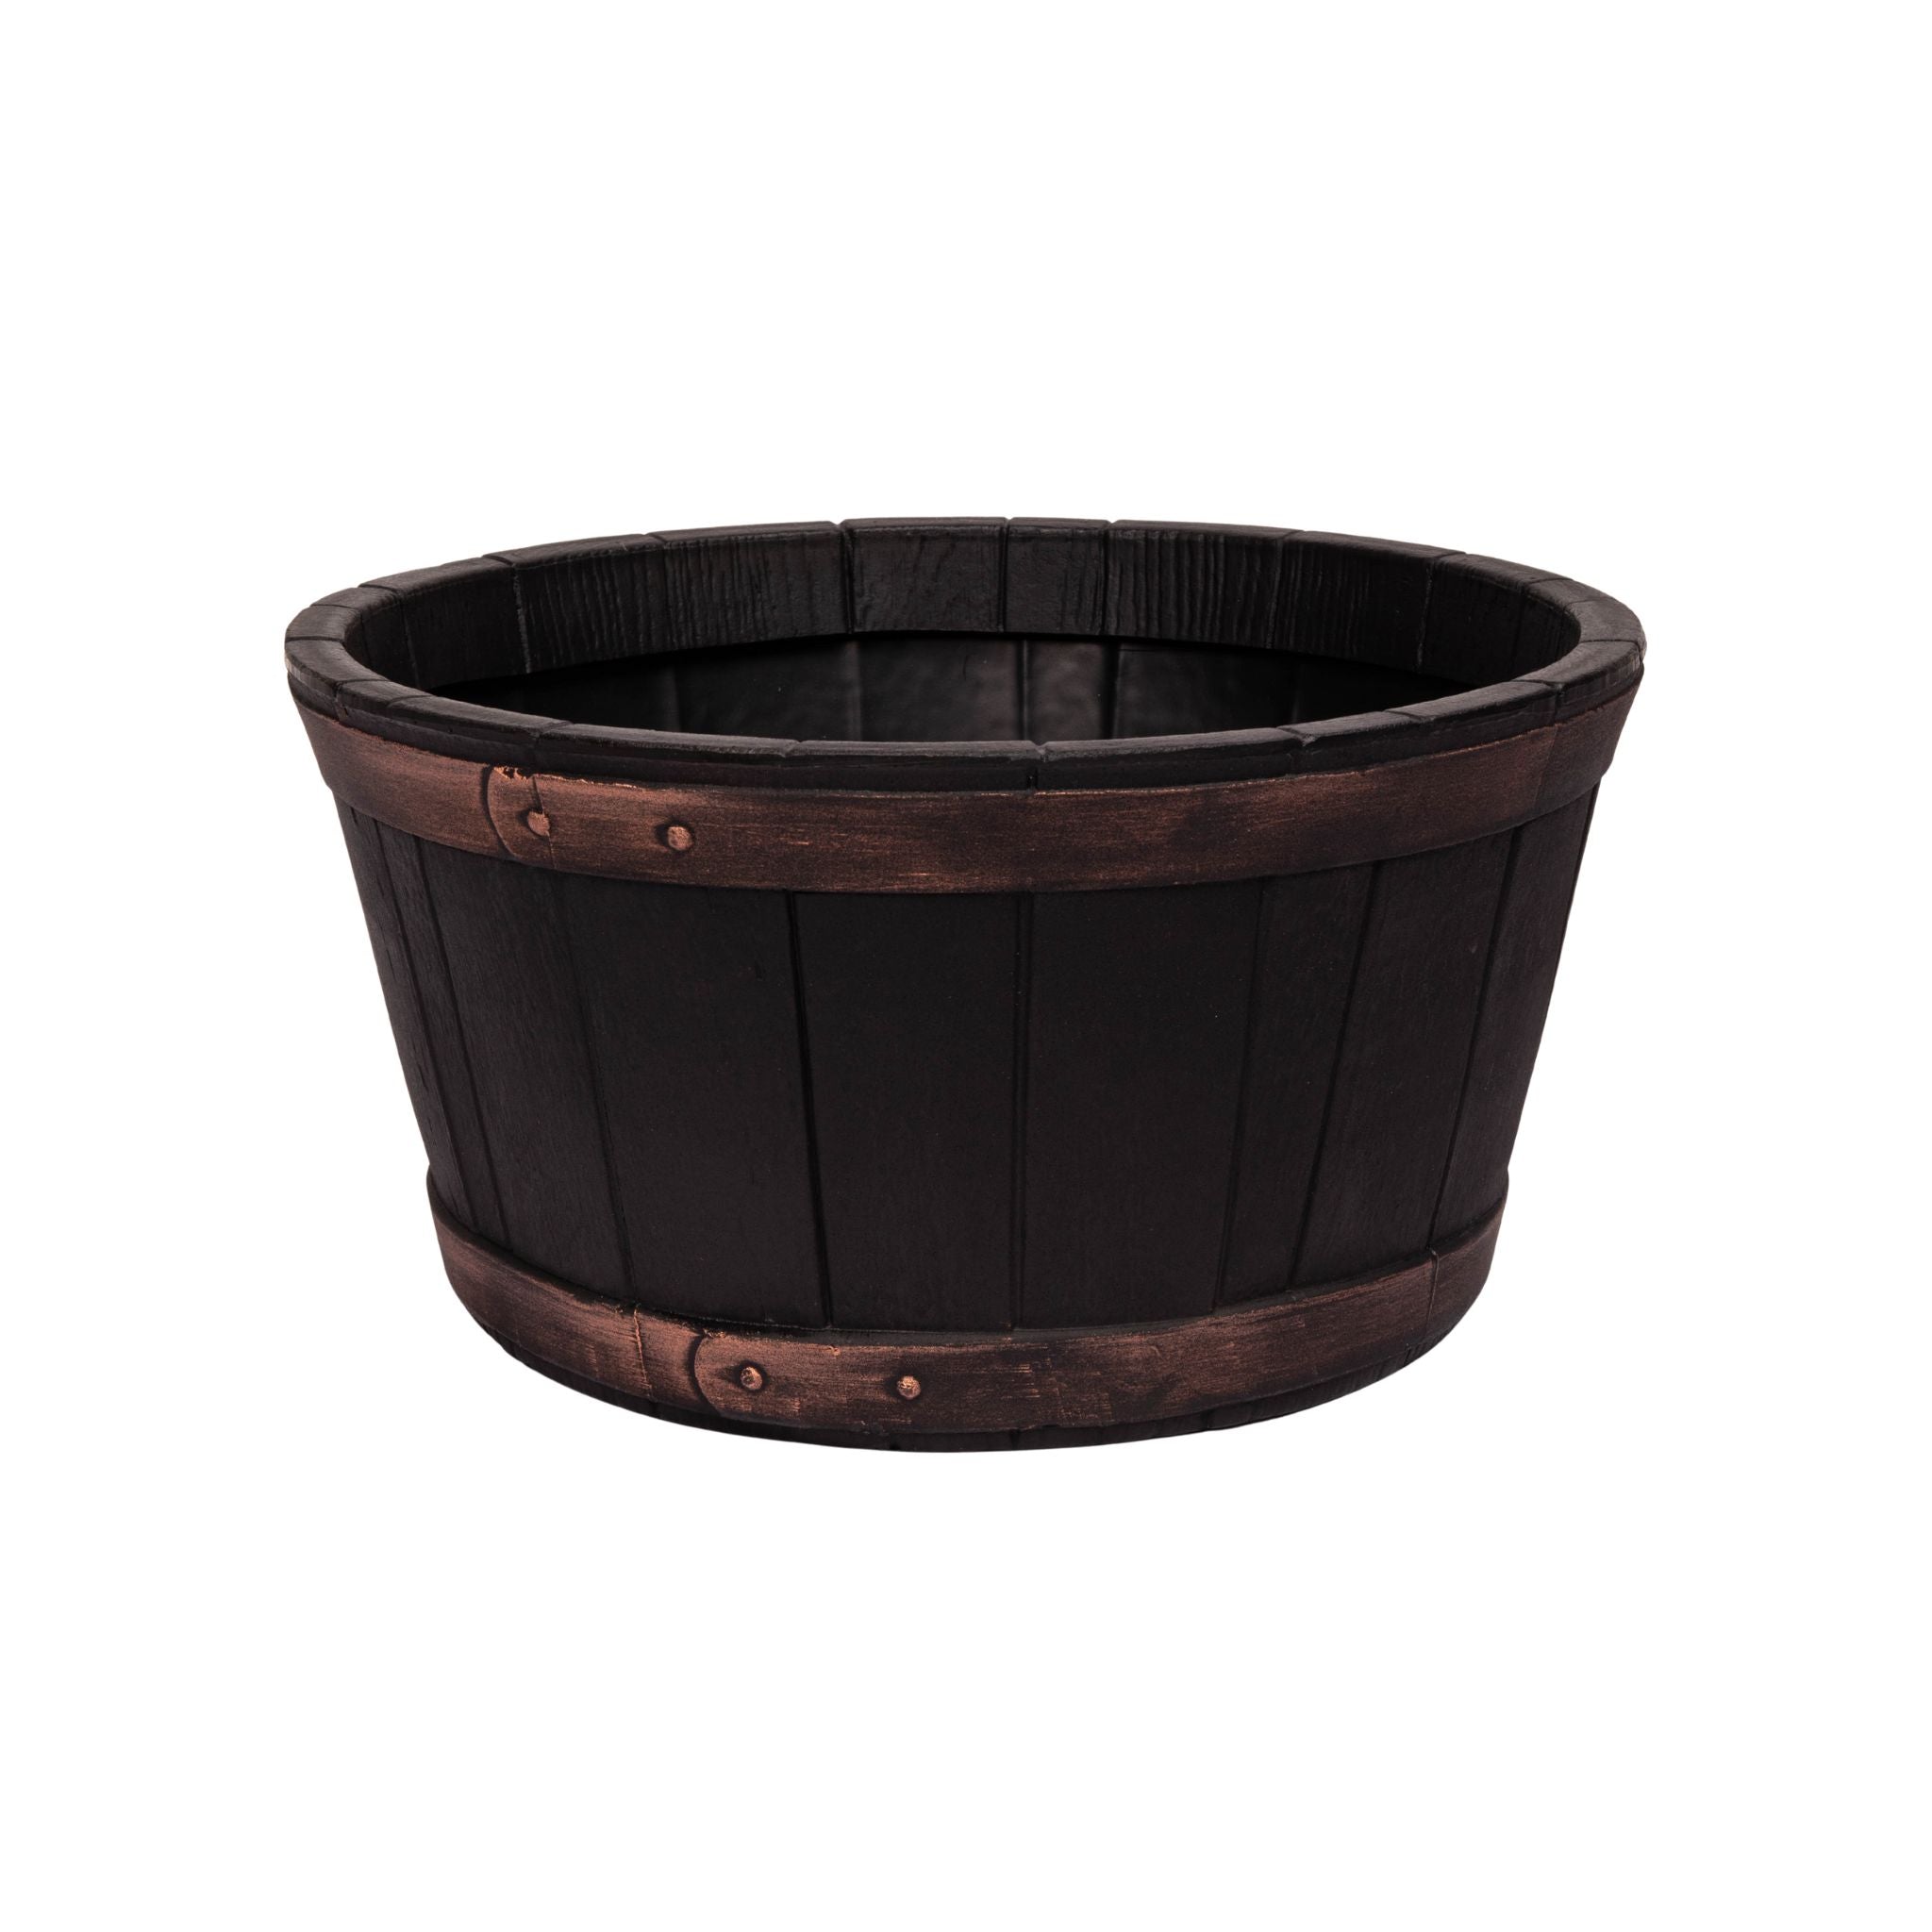 50cm Black Round Plastic Oak Wood Barrel Effect Decorative Garden Patio Planter